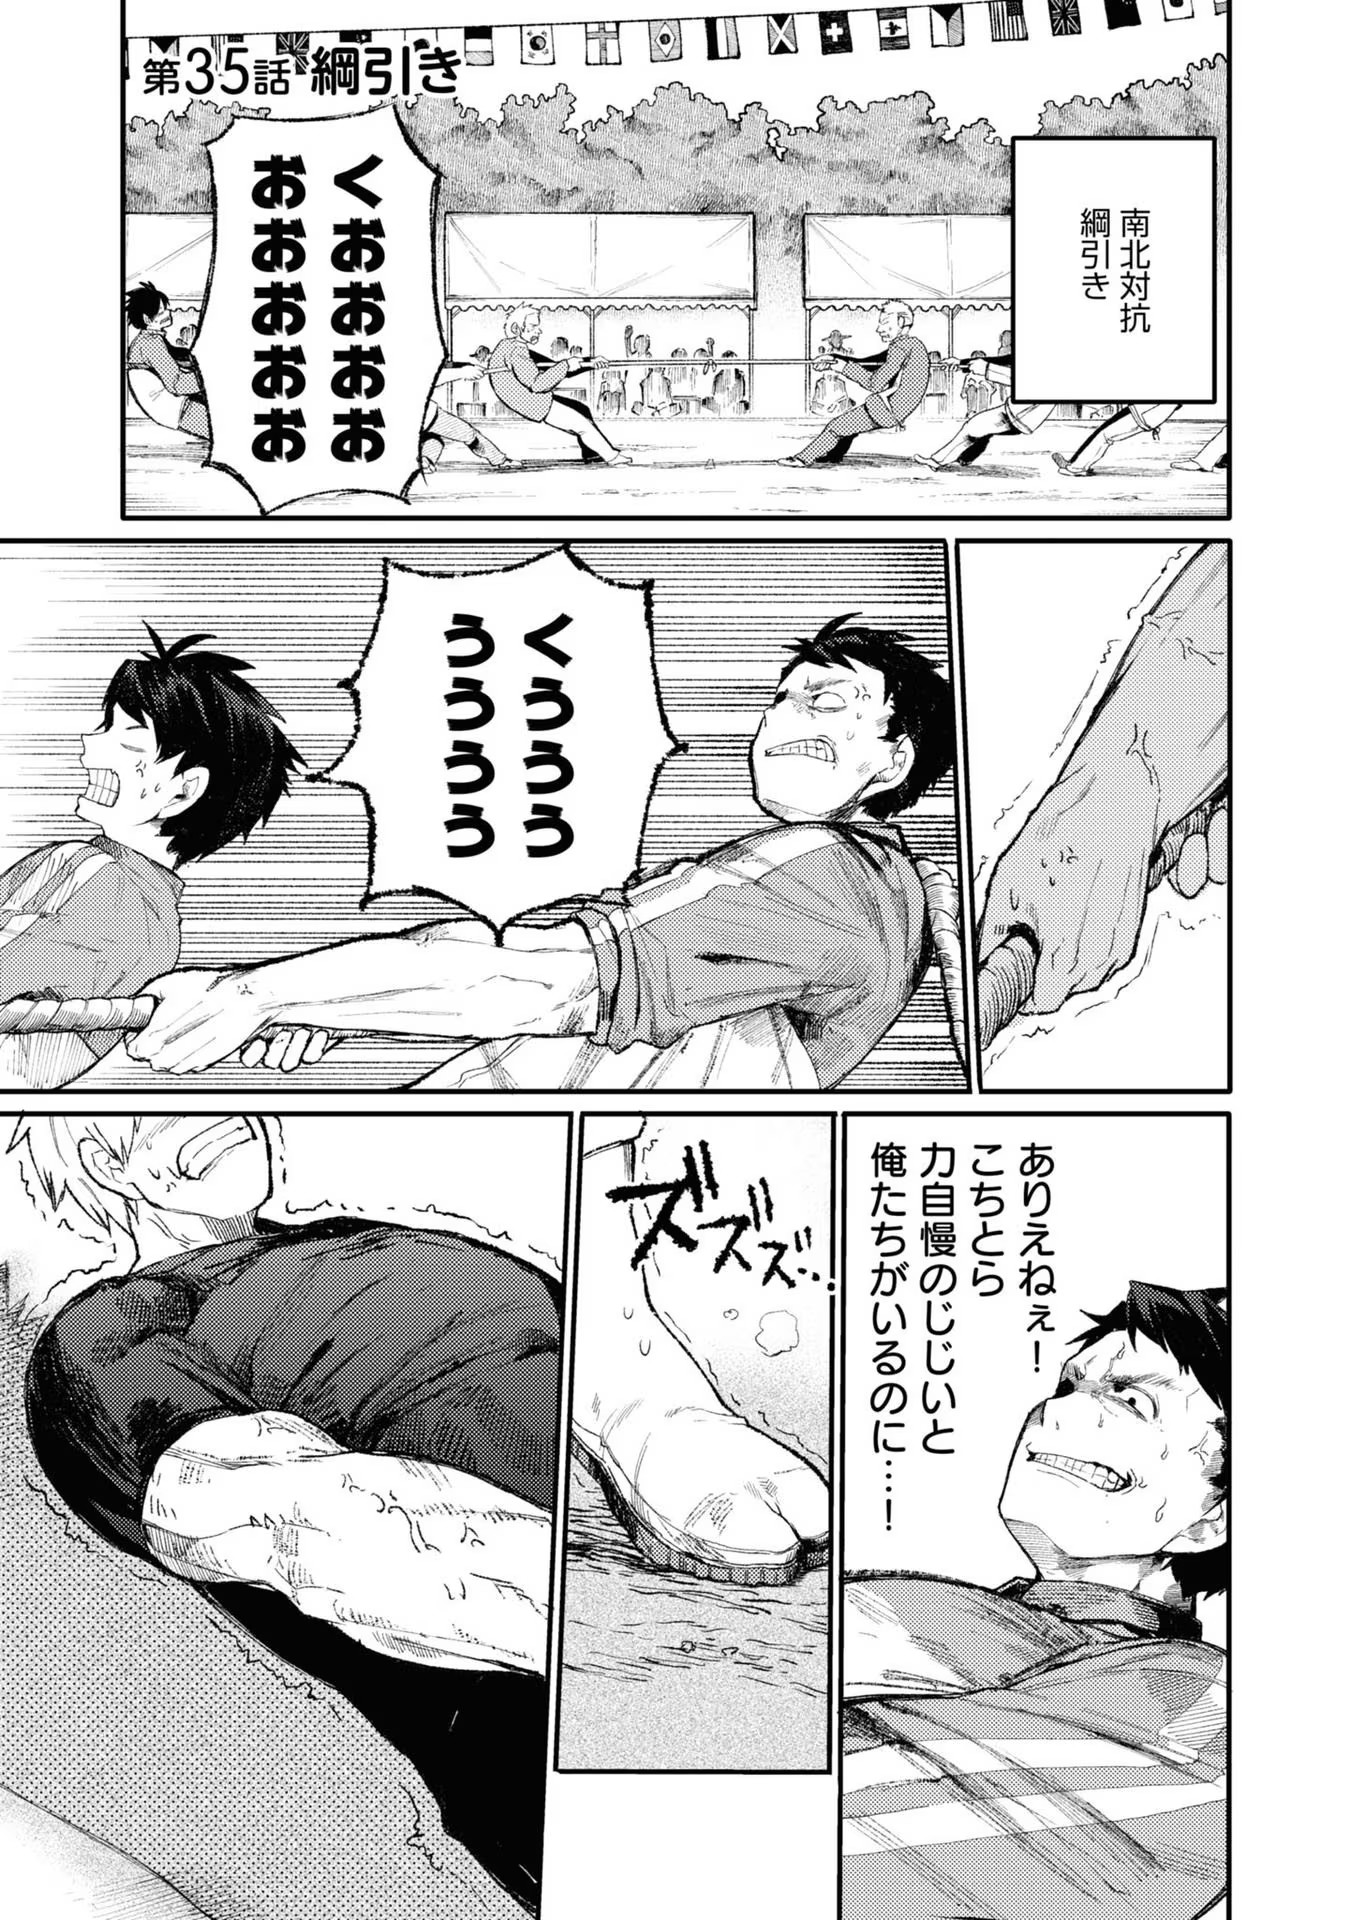 Ojii-san to Obaa-san ga Wakigaetta Hanashi - Chapter 35 - Page 1